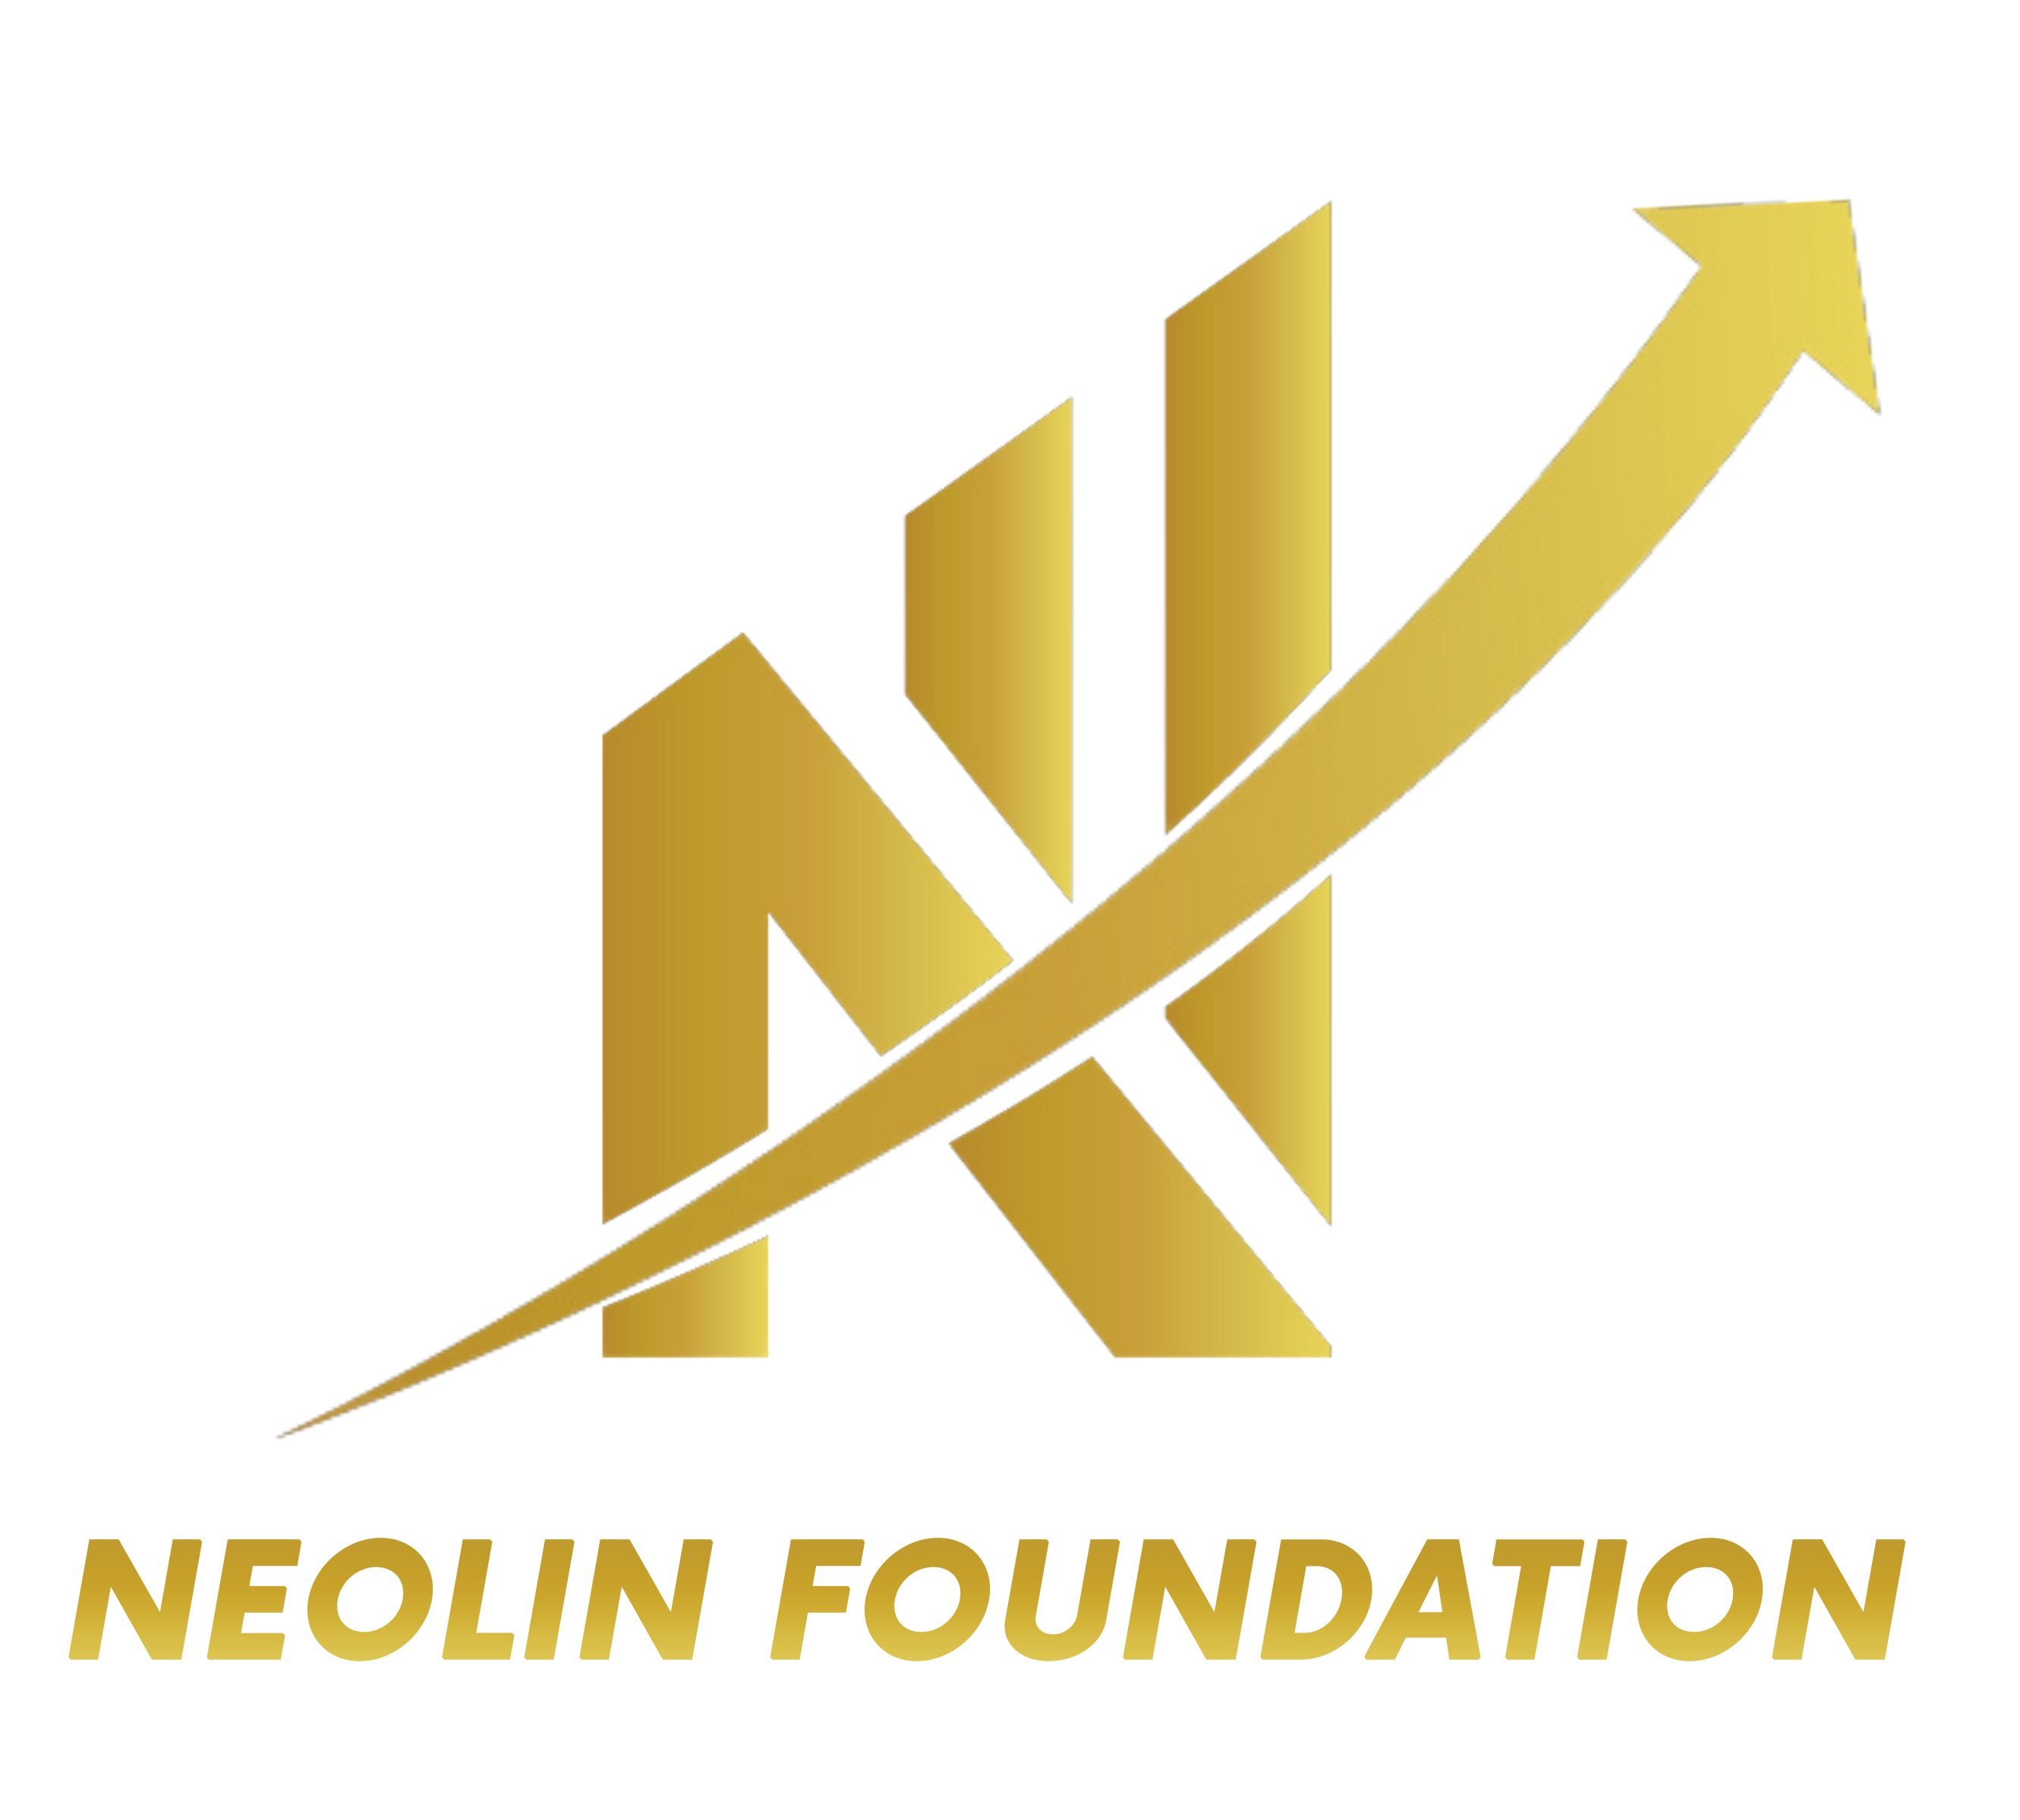 Neolin Foundation